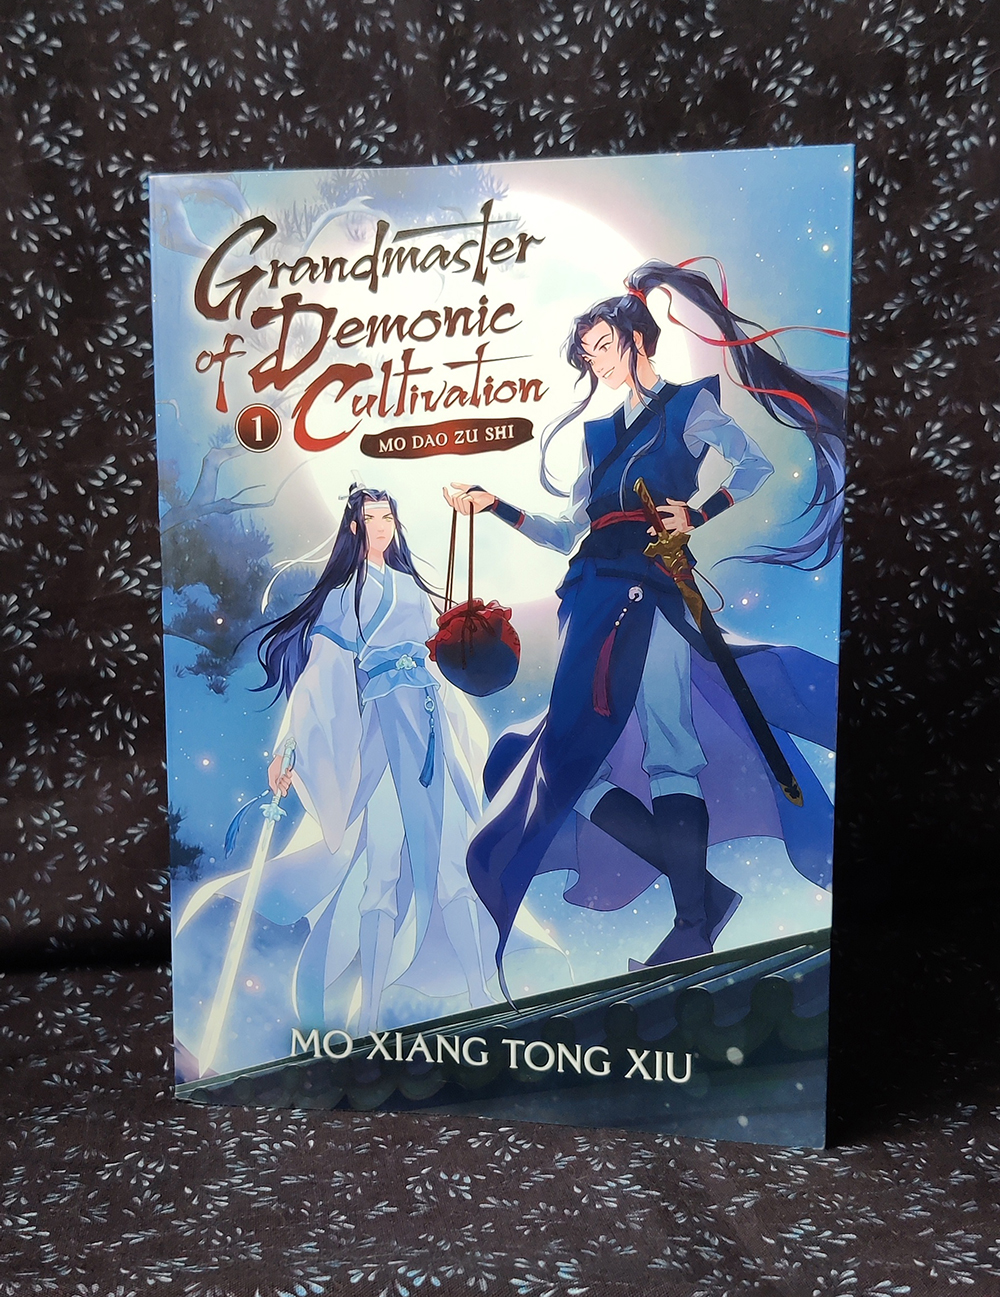 Grandmaster Of Demonic Cultivation (Mo Dao Zu Shi